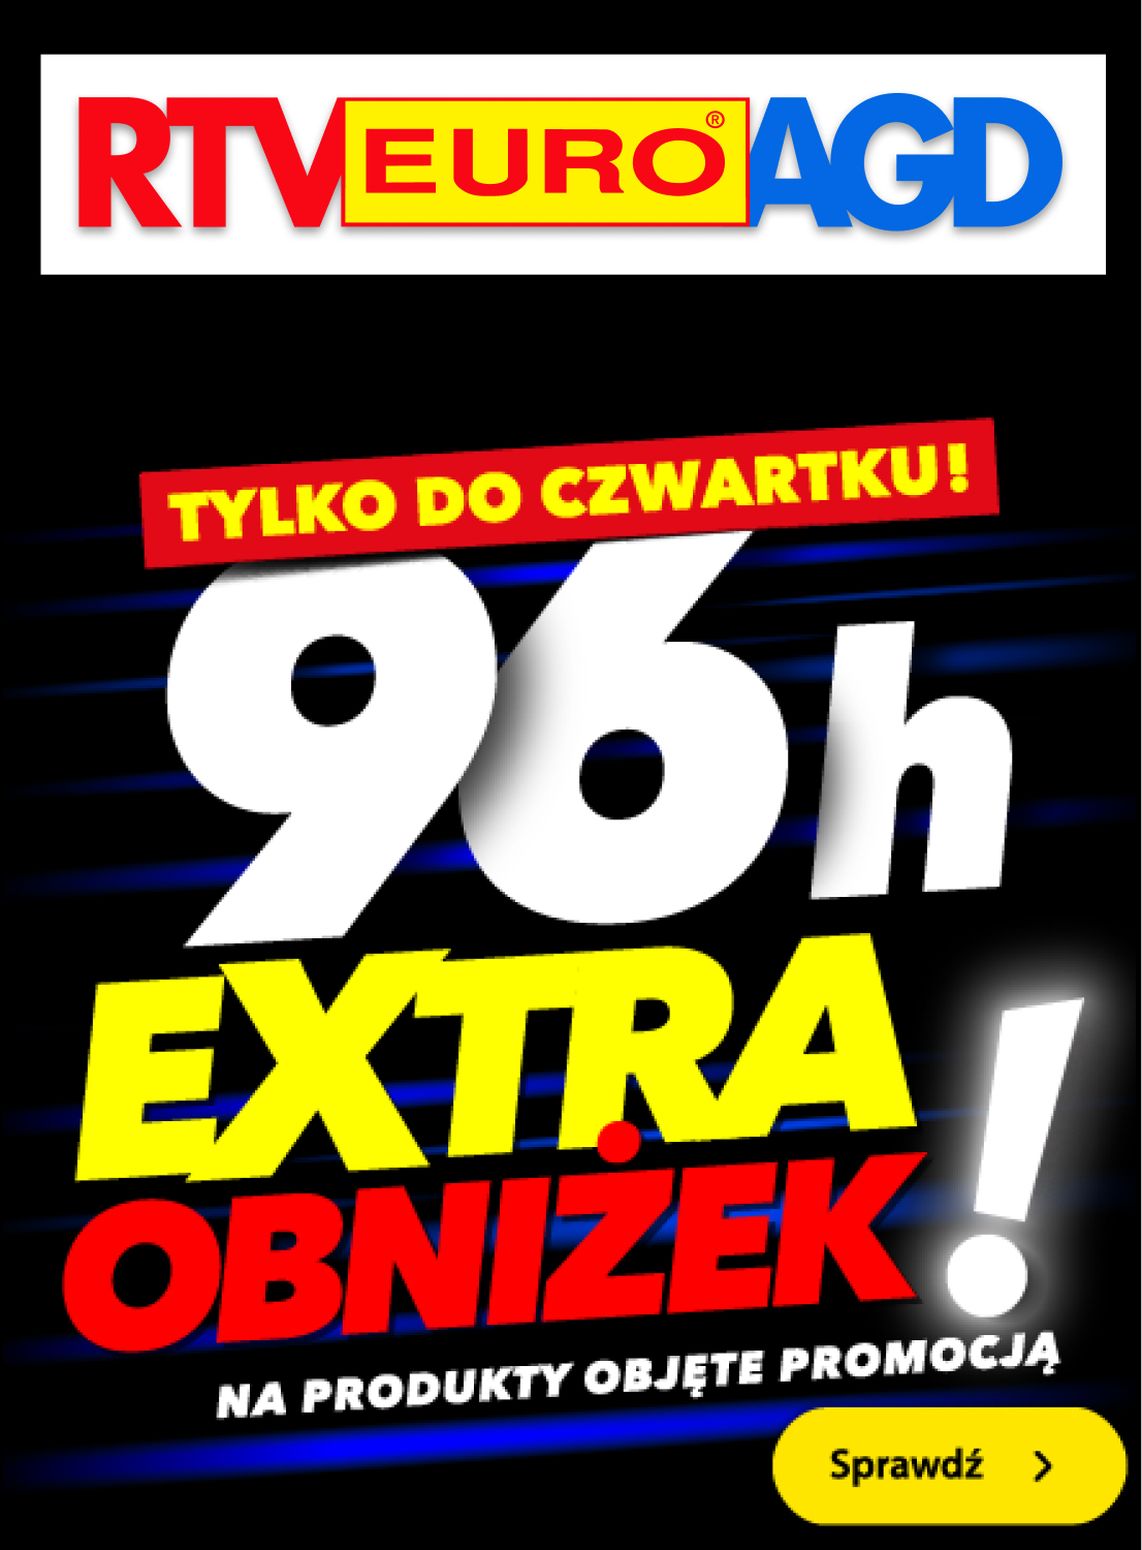 gazetka promocyjna RTV EURO AGD 96h obniżek! - Strona 1